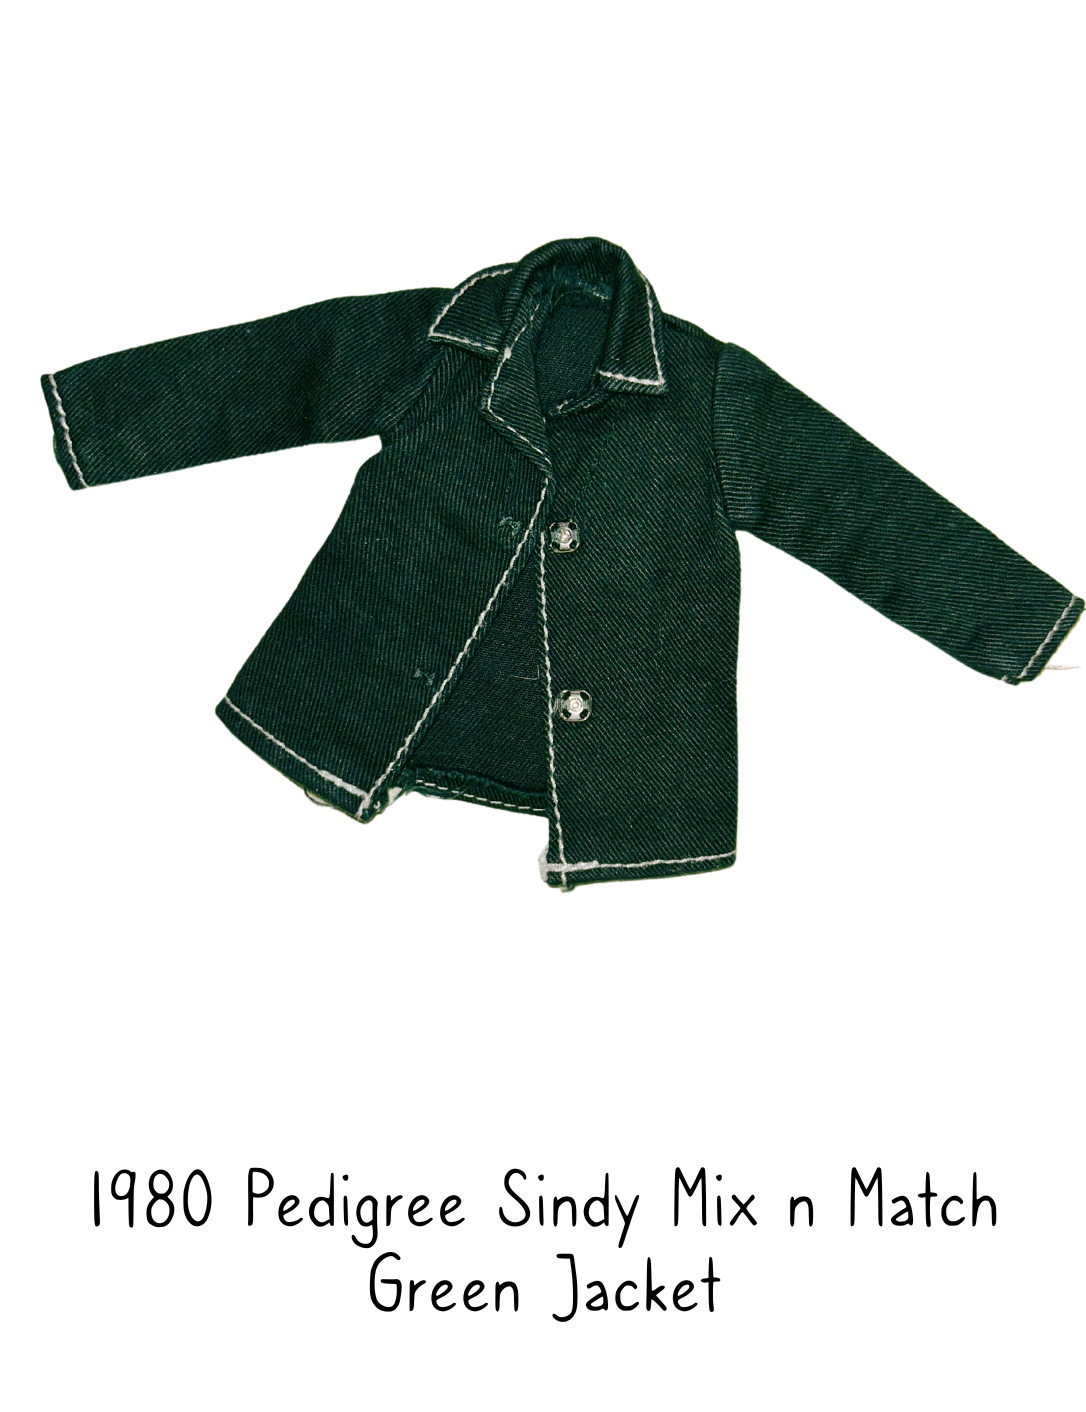 Pedigree Sindy 1980 Mix n Match Green Jacket